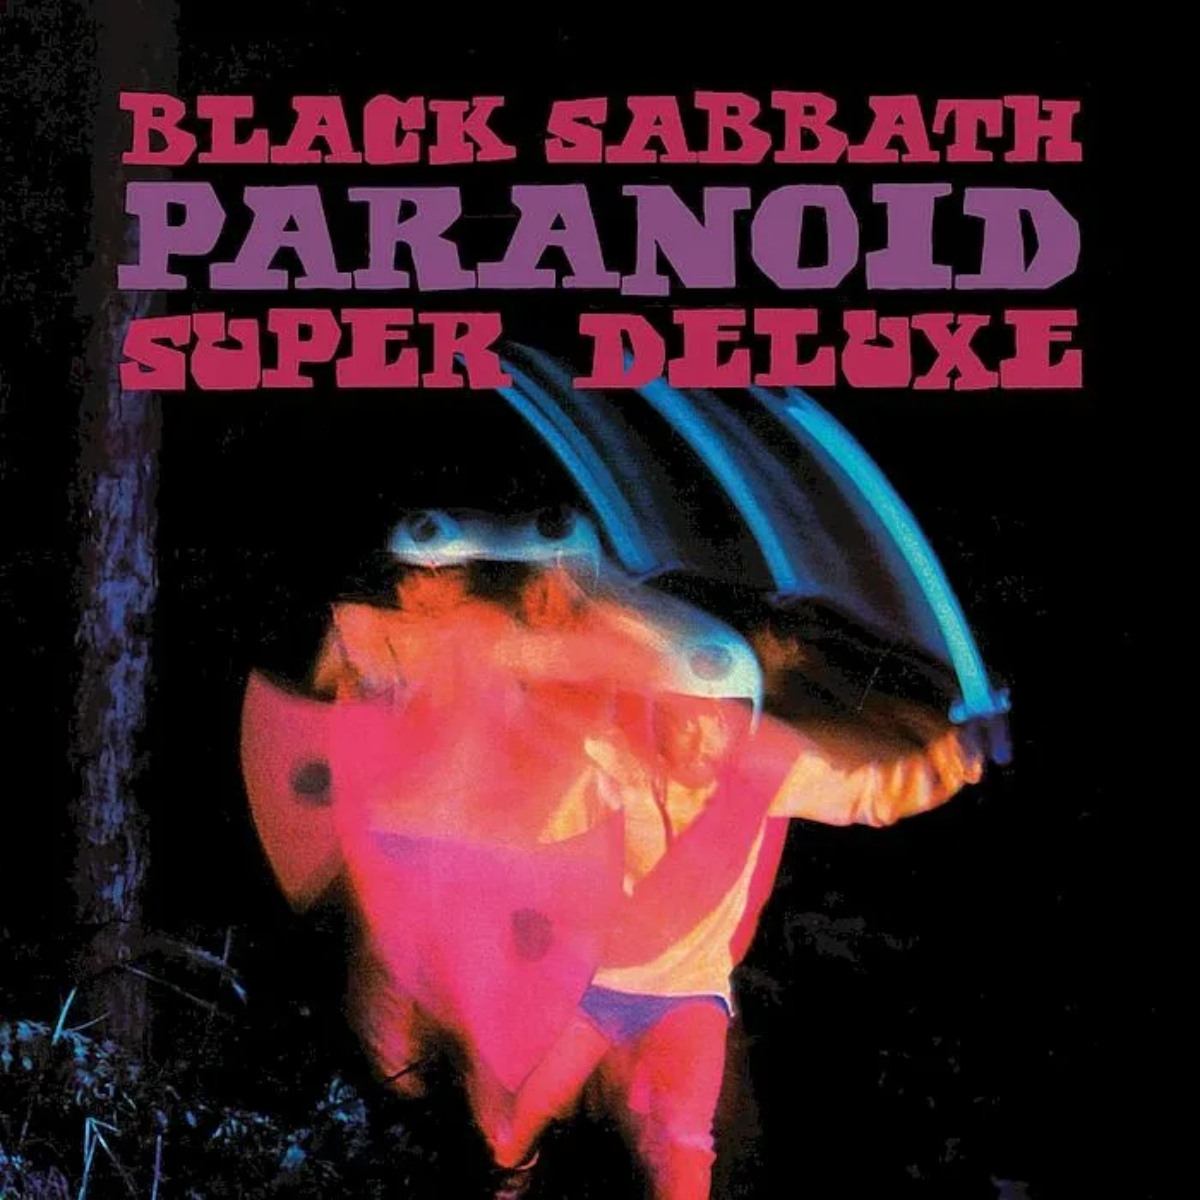 Portada del álbum "Paranoid" de Black Sabbath